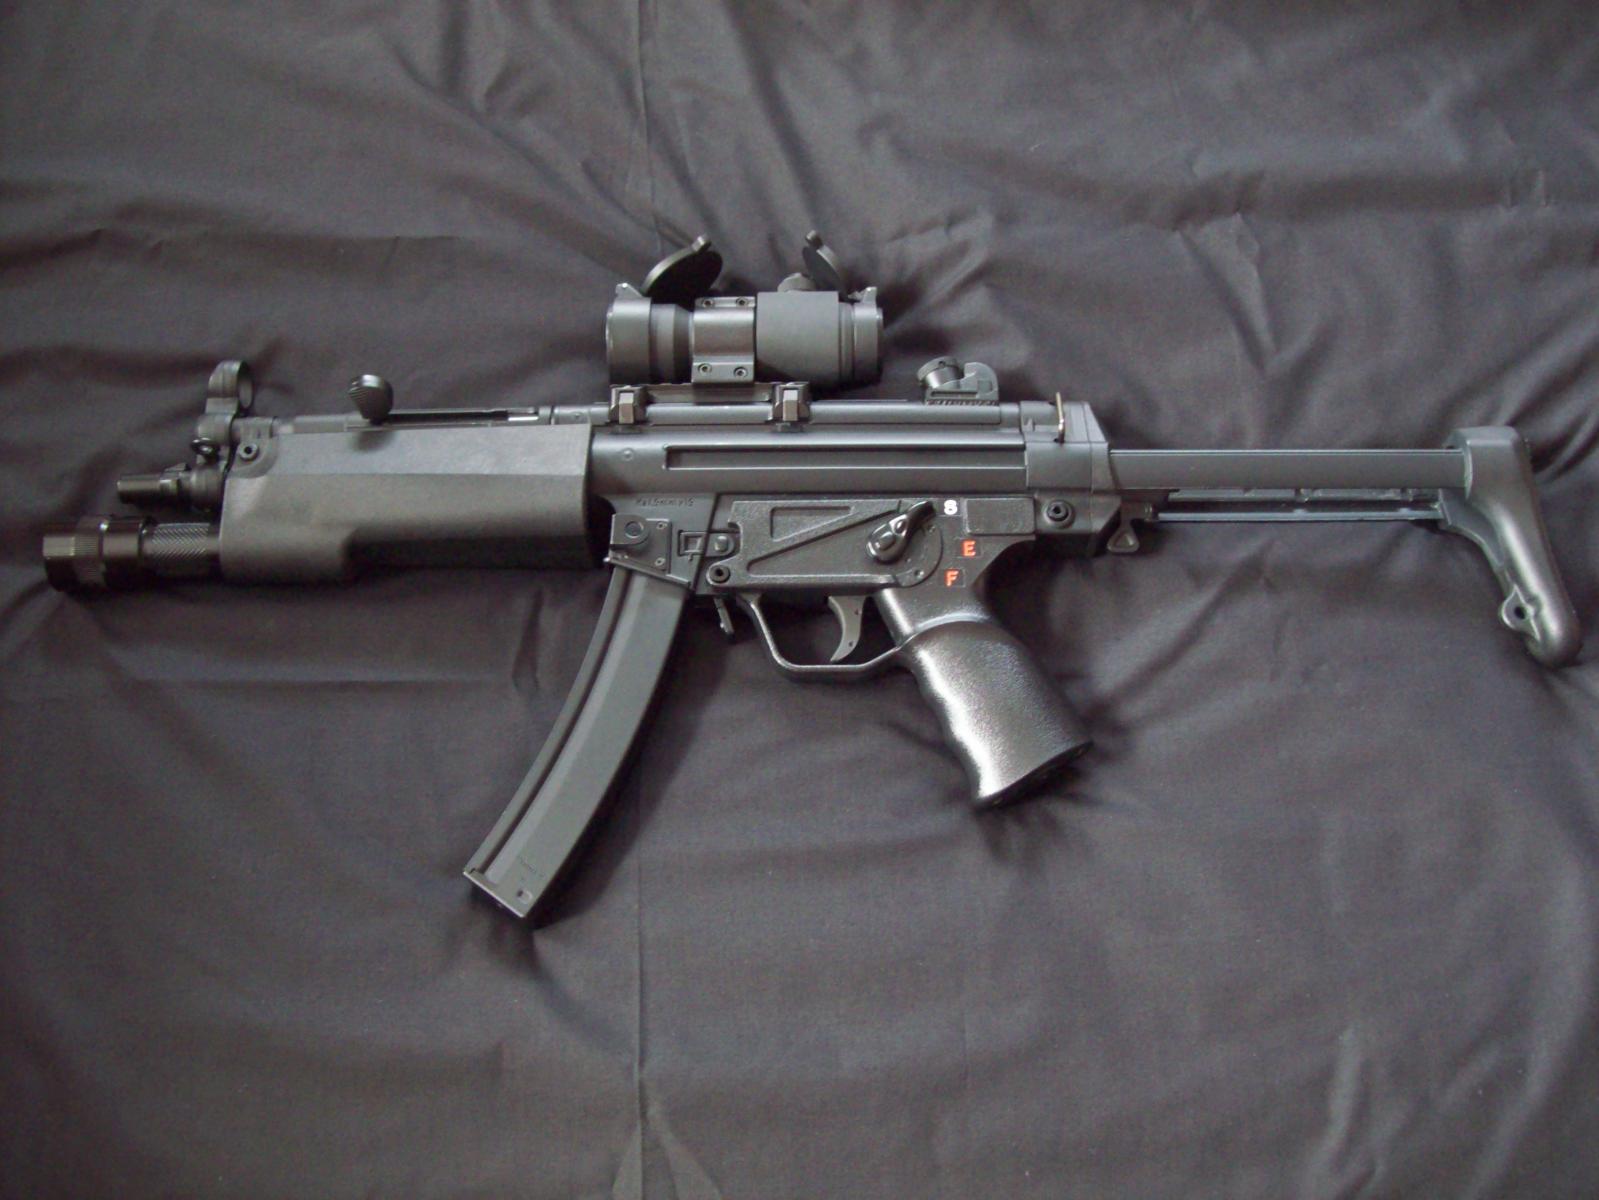 CA MP5A3